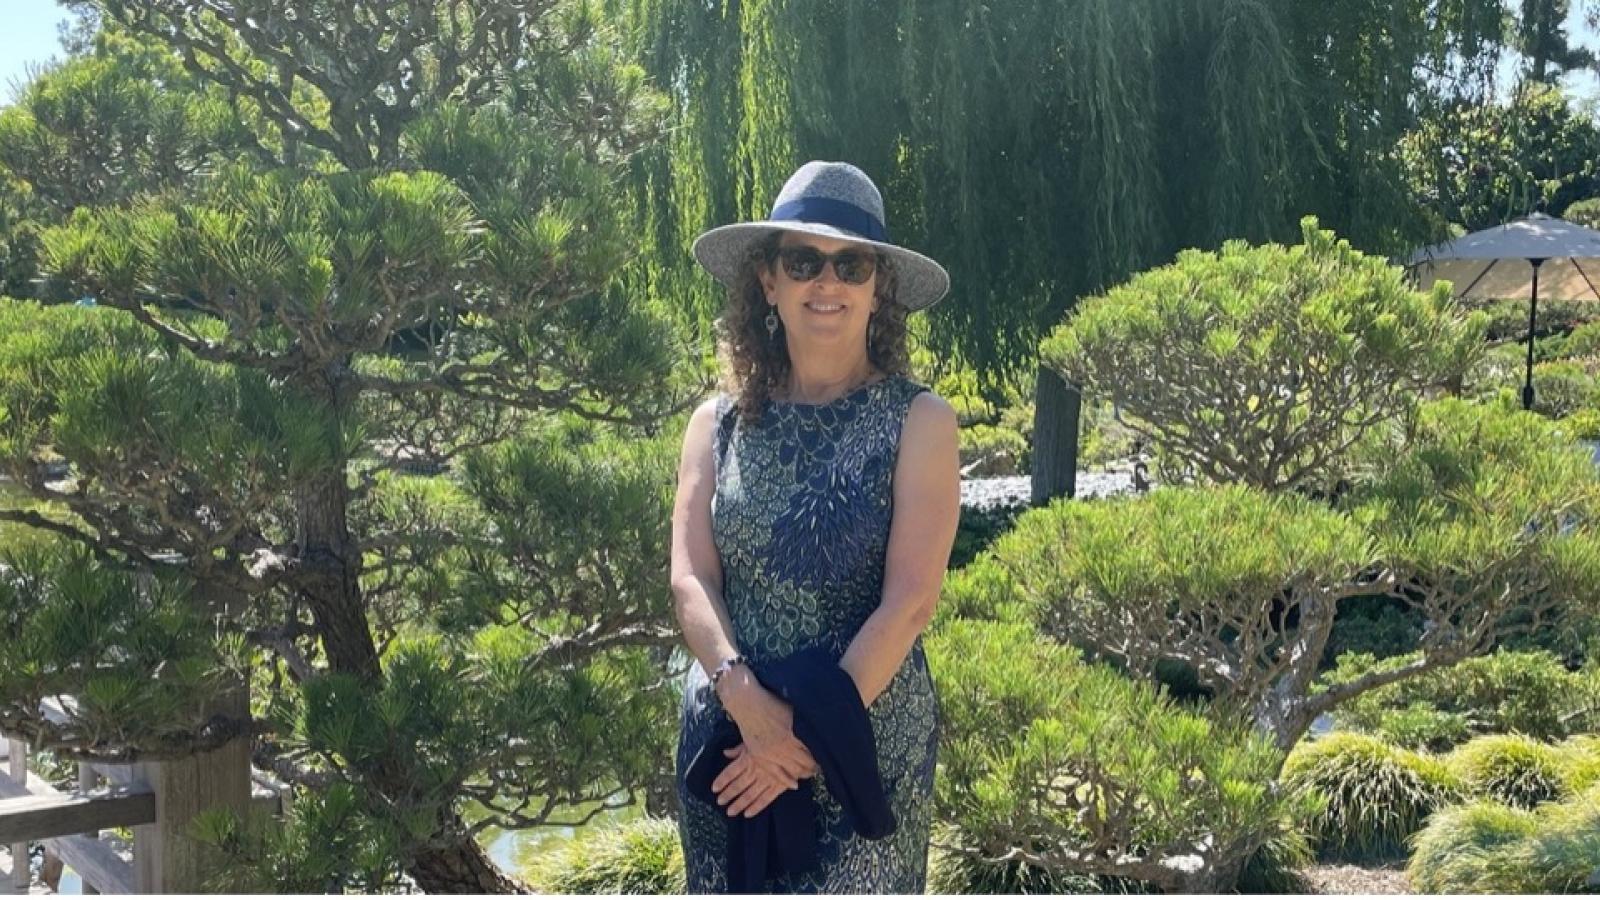 Maryanne Horton poses at the Japanese Garden